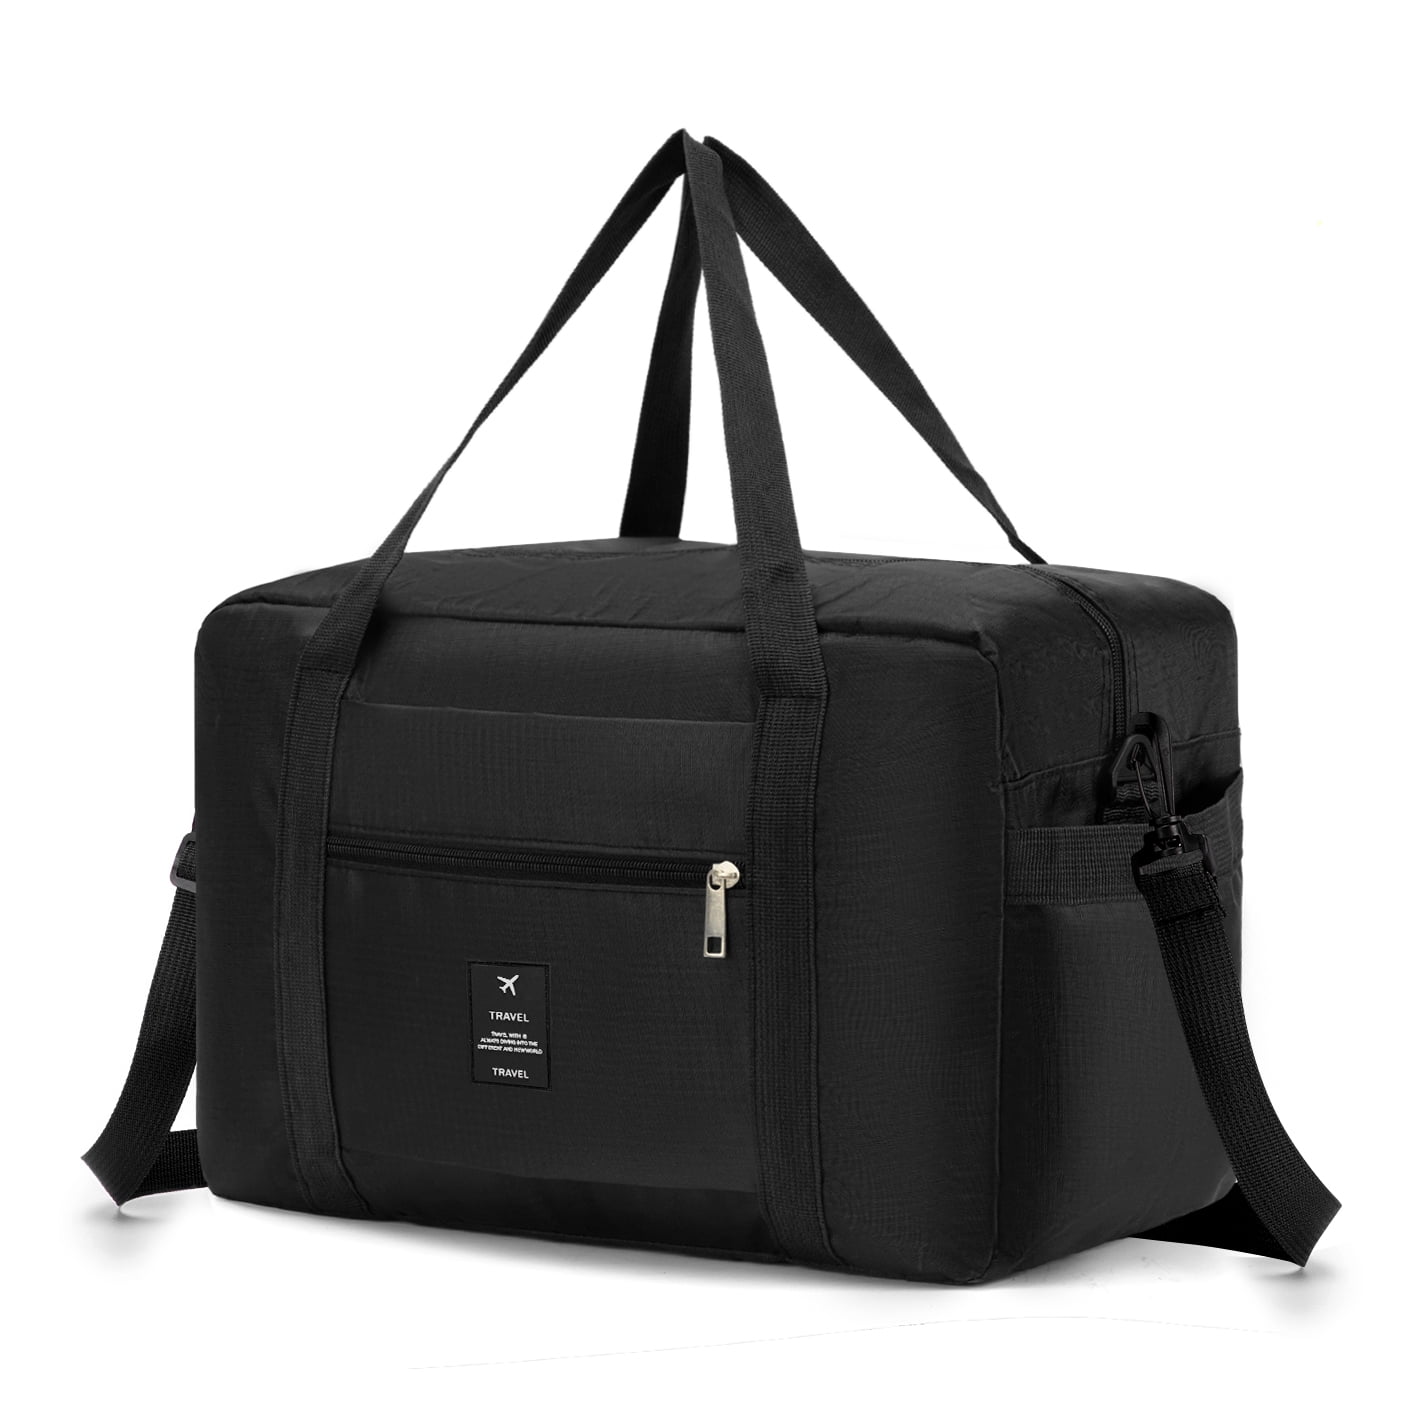 BAGZY Travel Bag 40x20x25 for Ryanair Underseat Cabin Bag, Large ...